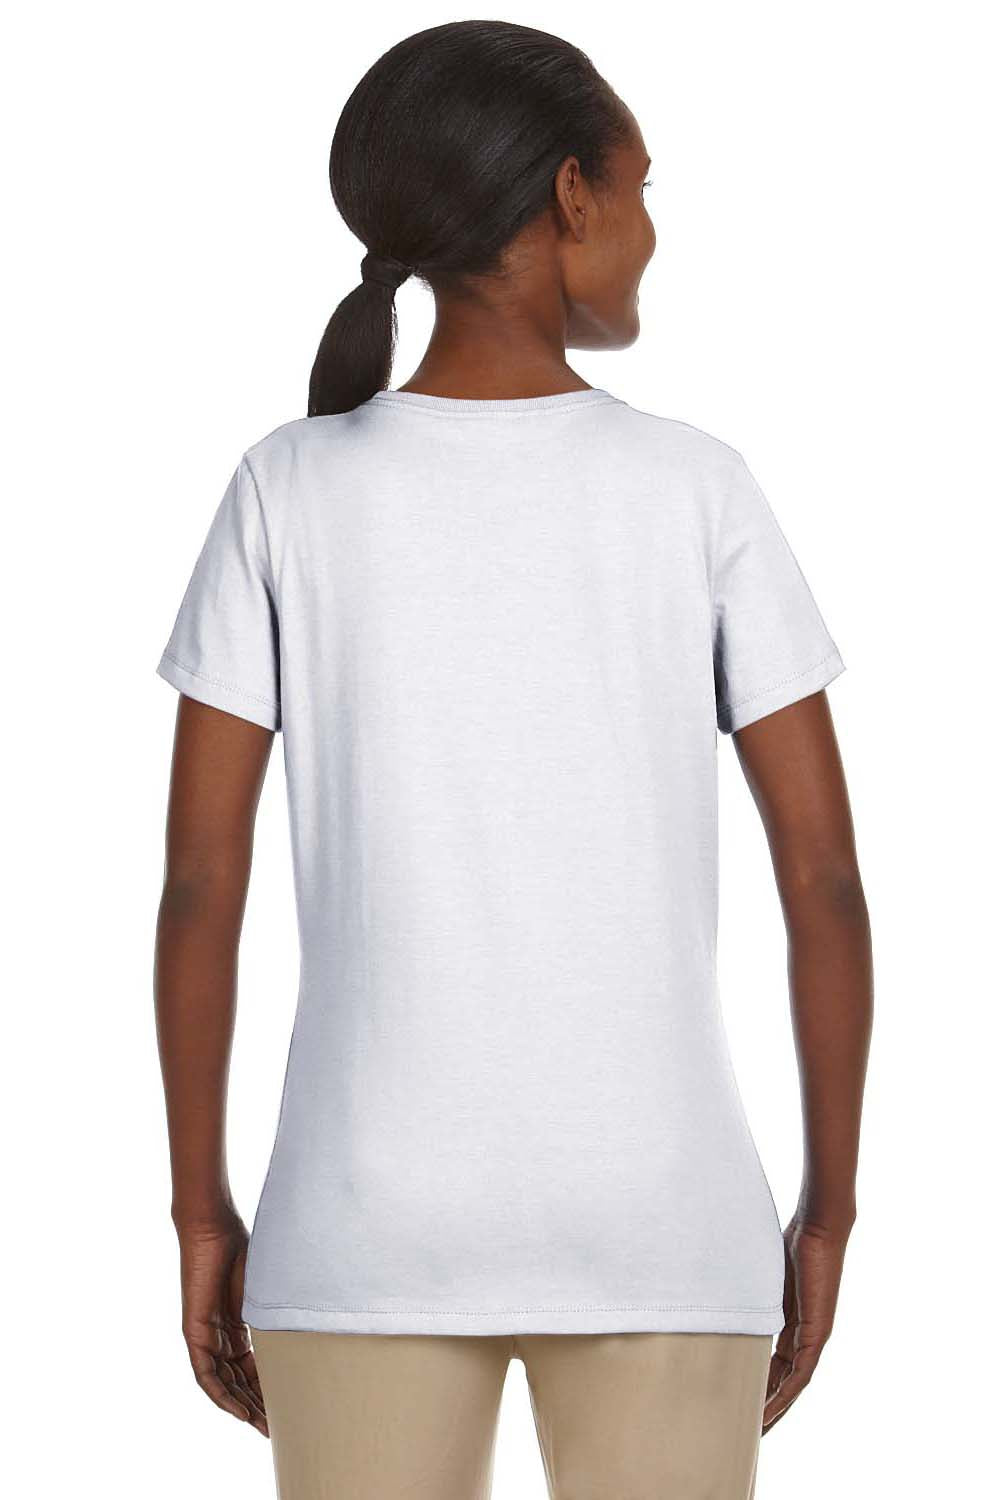 Jerzees 29WR Womens Dri-Power Moisture Wicking Short Sleeve Crewneck T-Shirt White Back